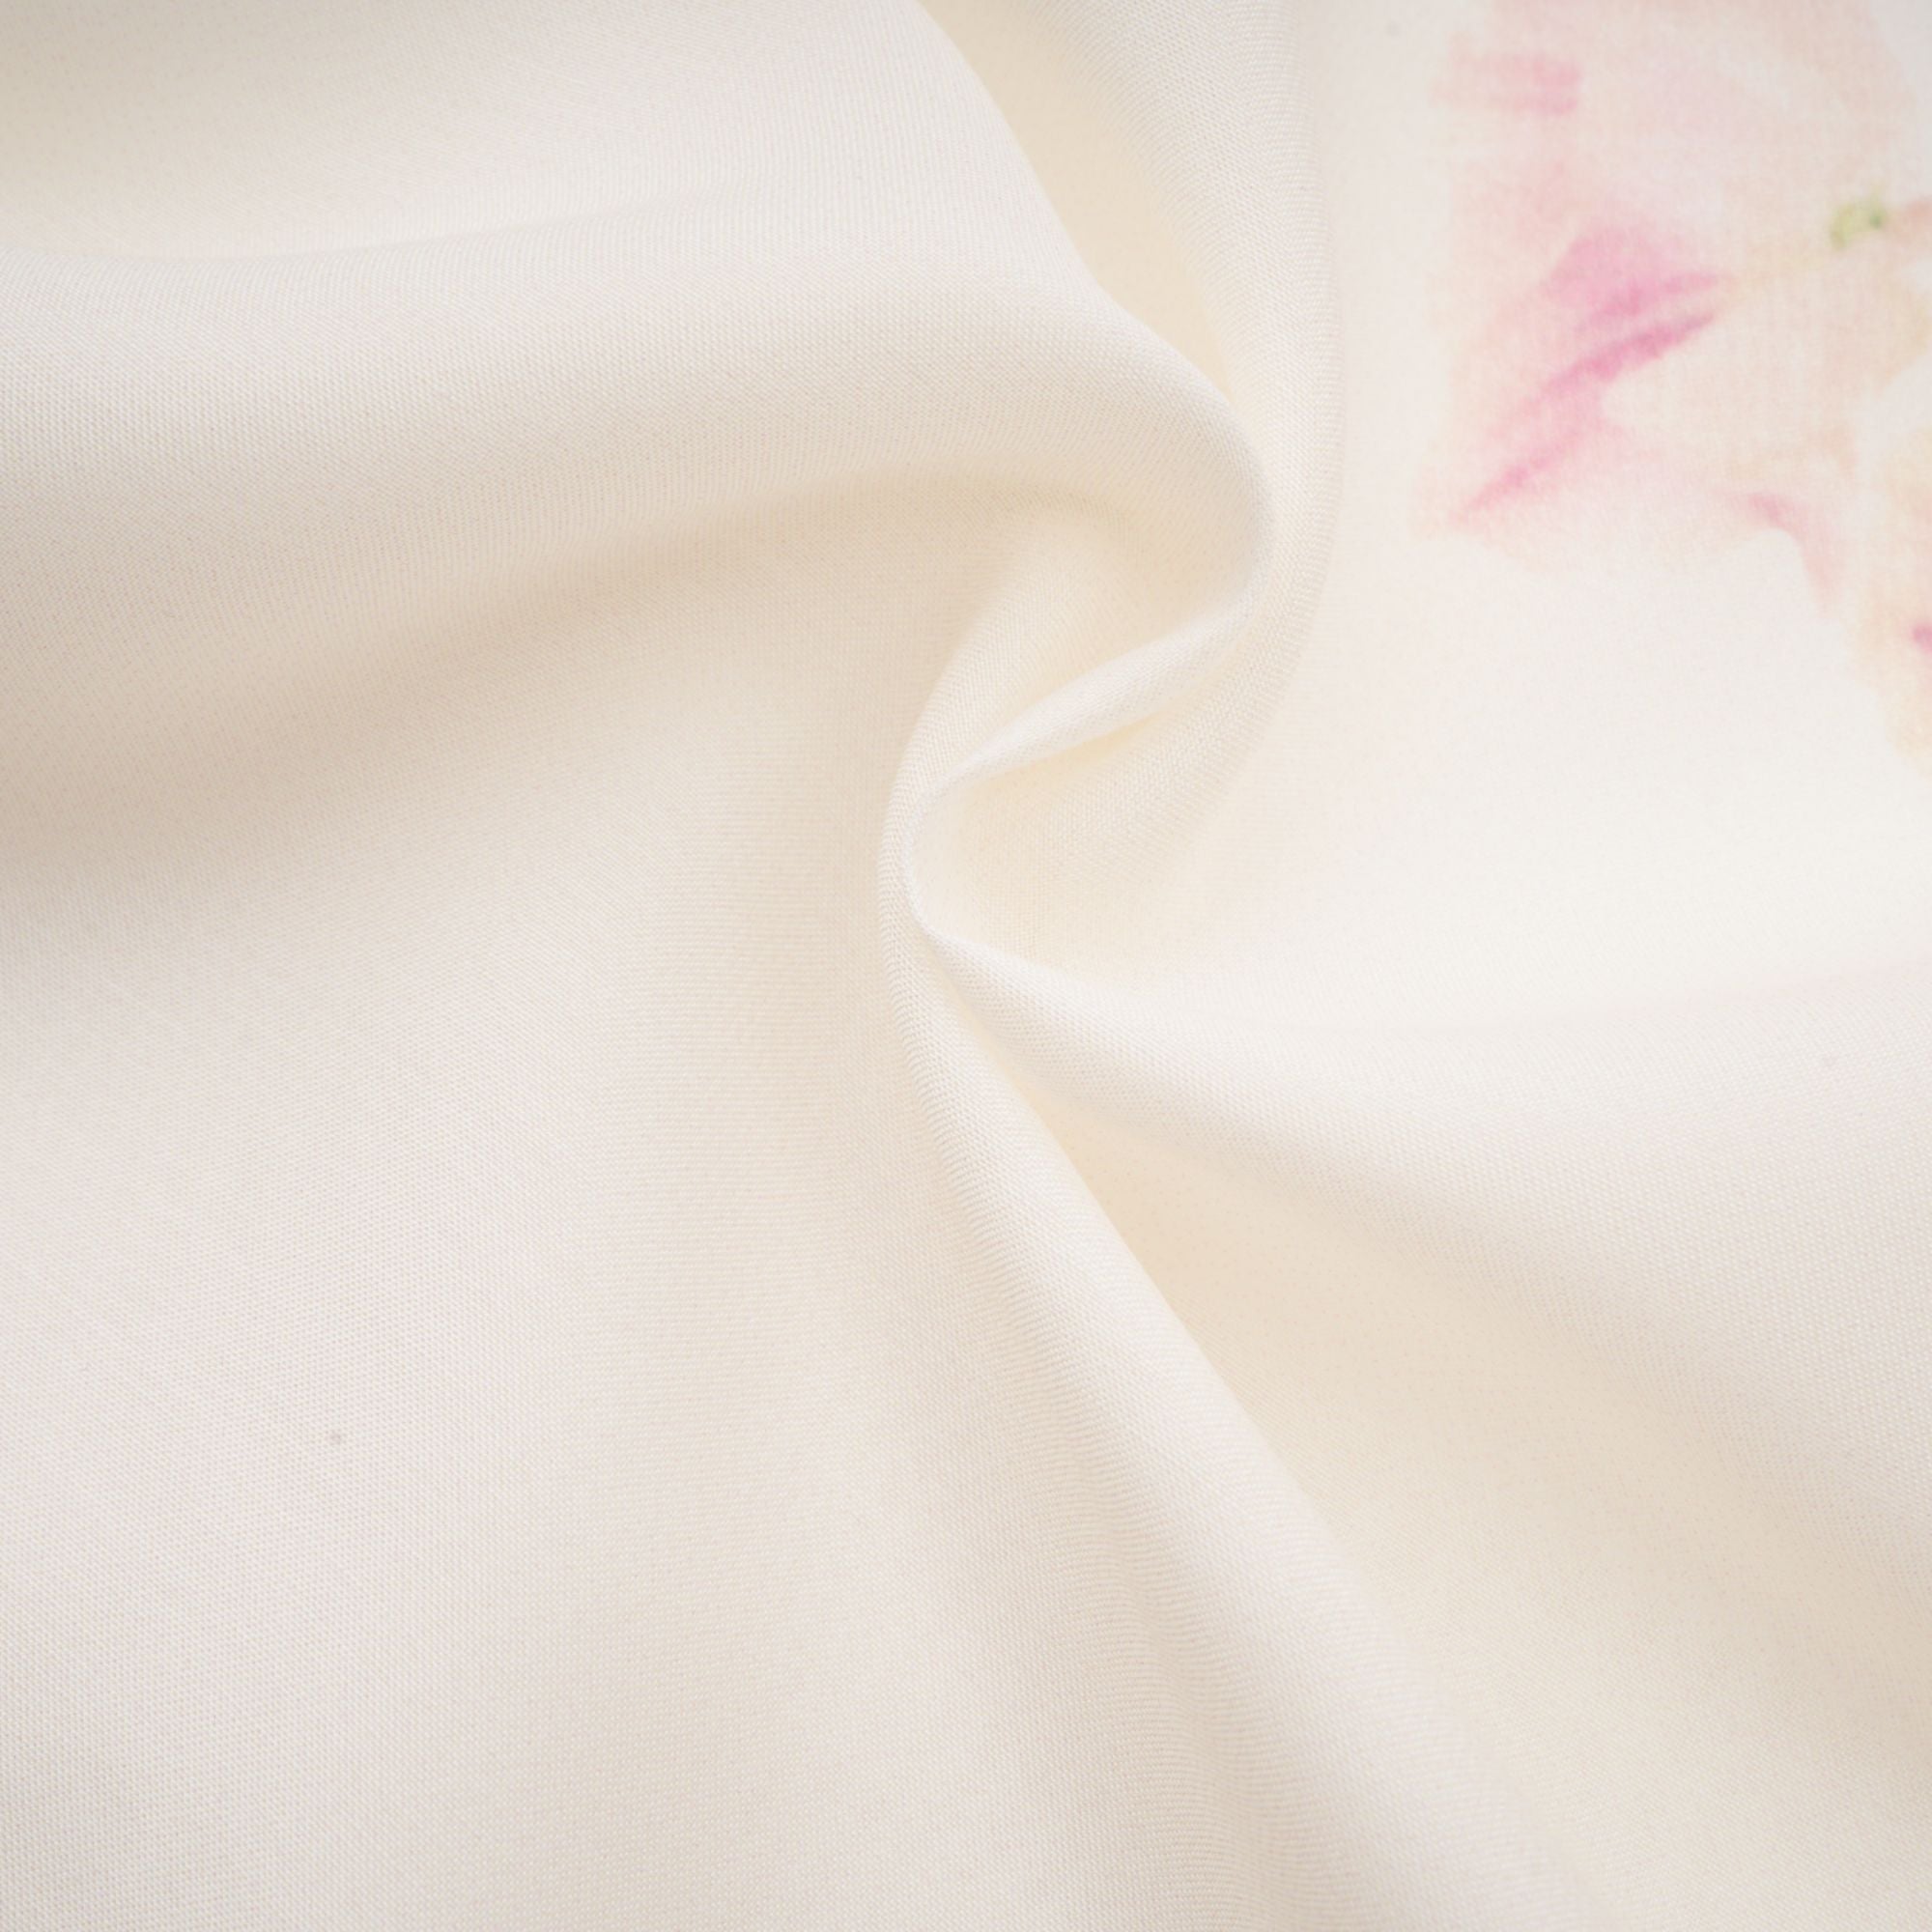 Roxane belted floral-print midi dress